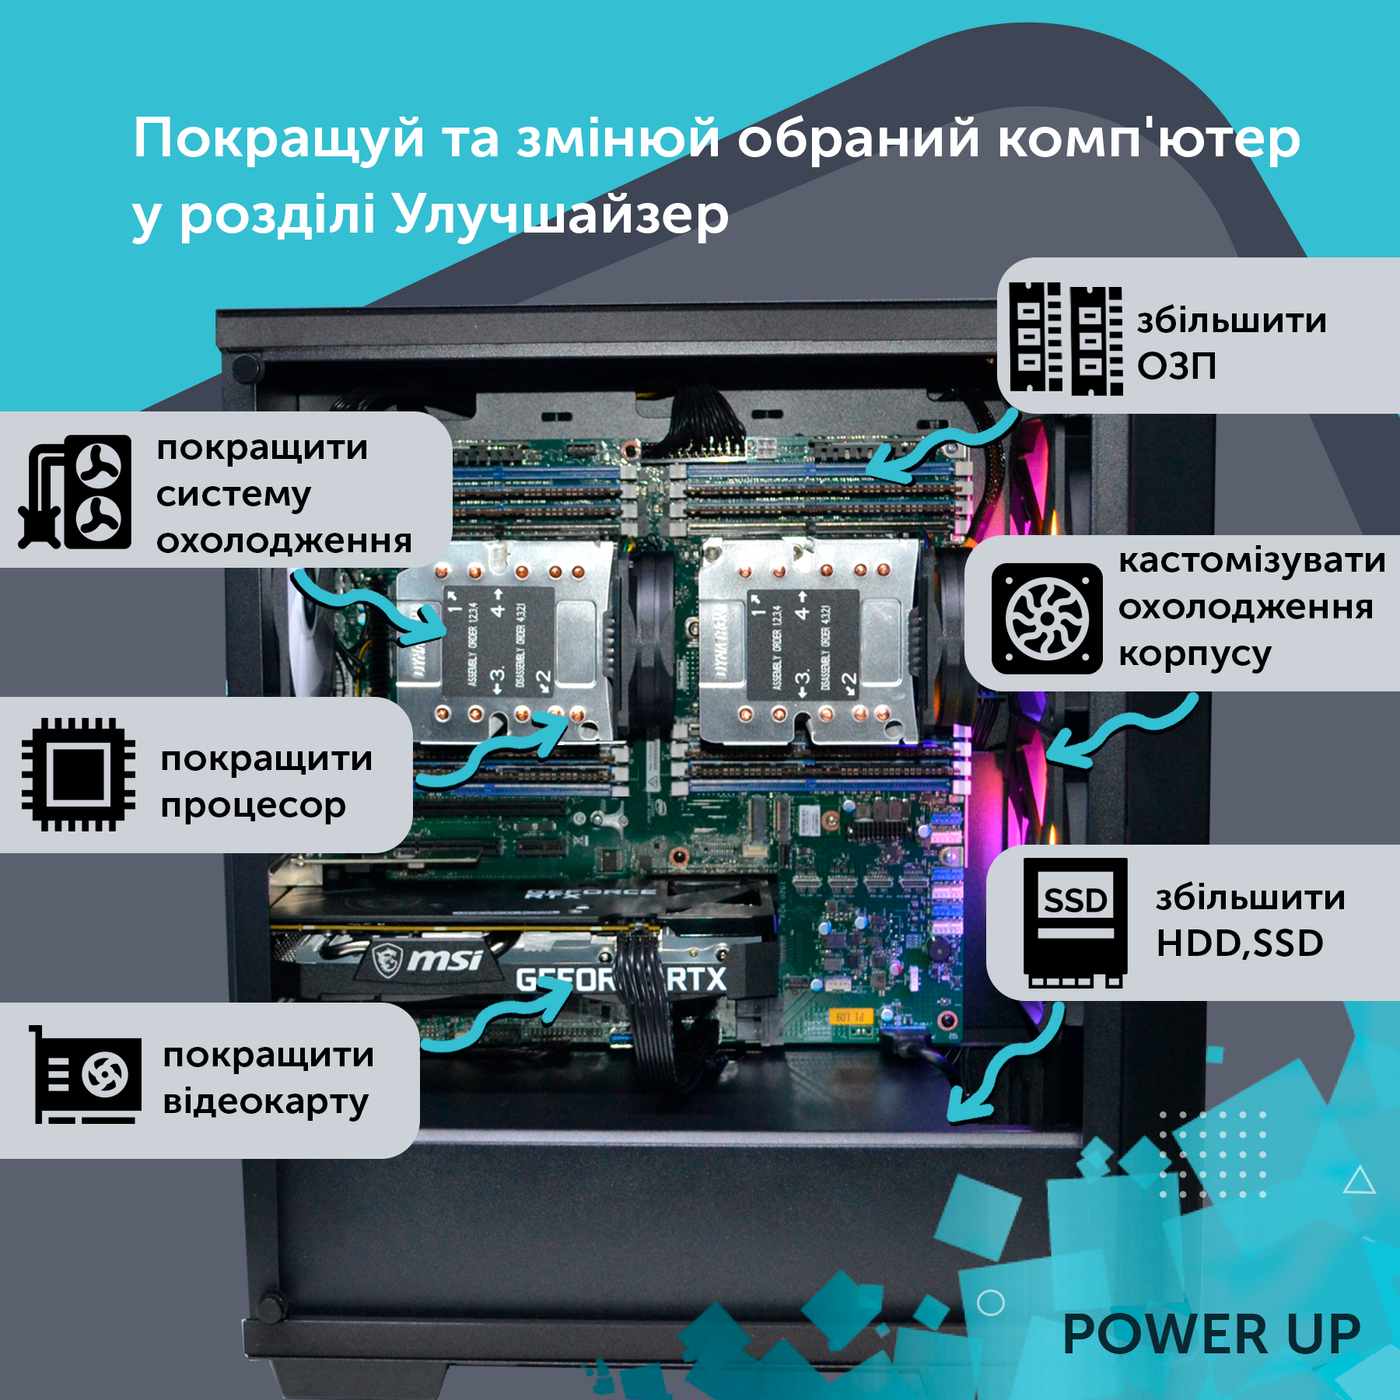 Робоча станція PowerUp #249 AMD EPYC 7282/128 GB/SSD 1TB/NVIDIA Quadro RTX A4000 16GB